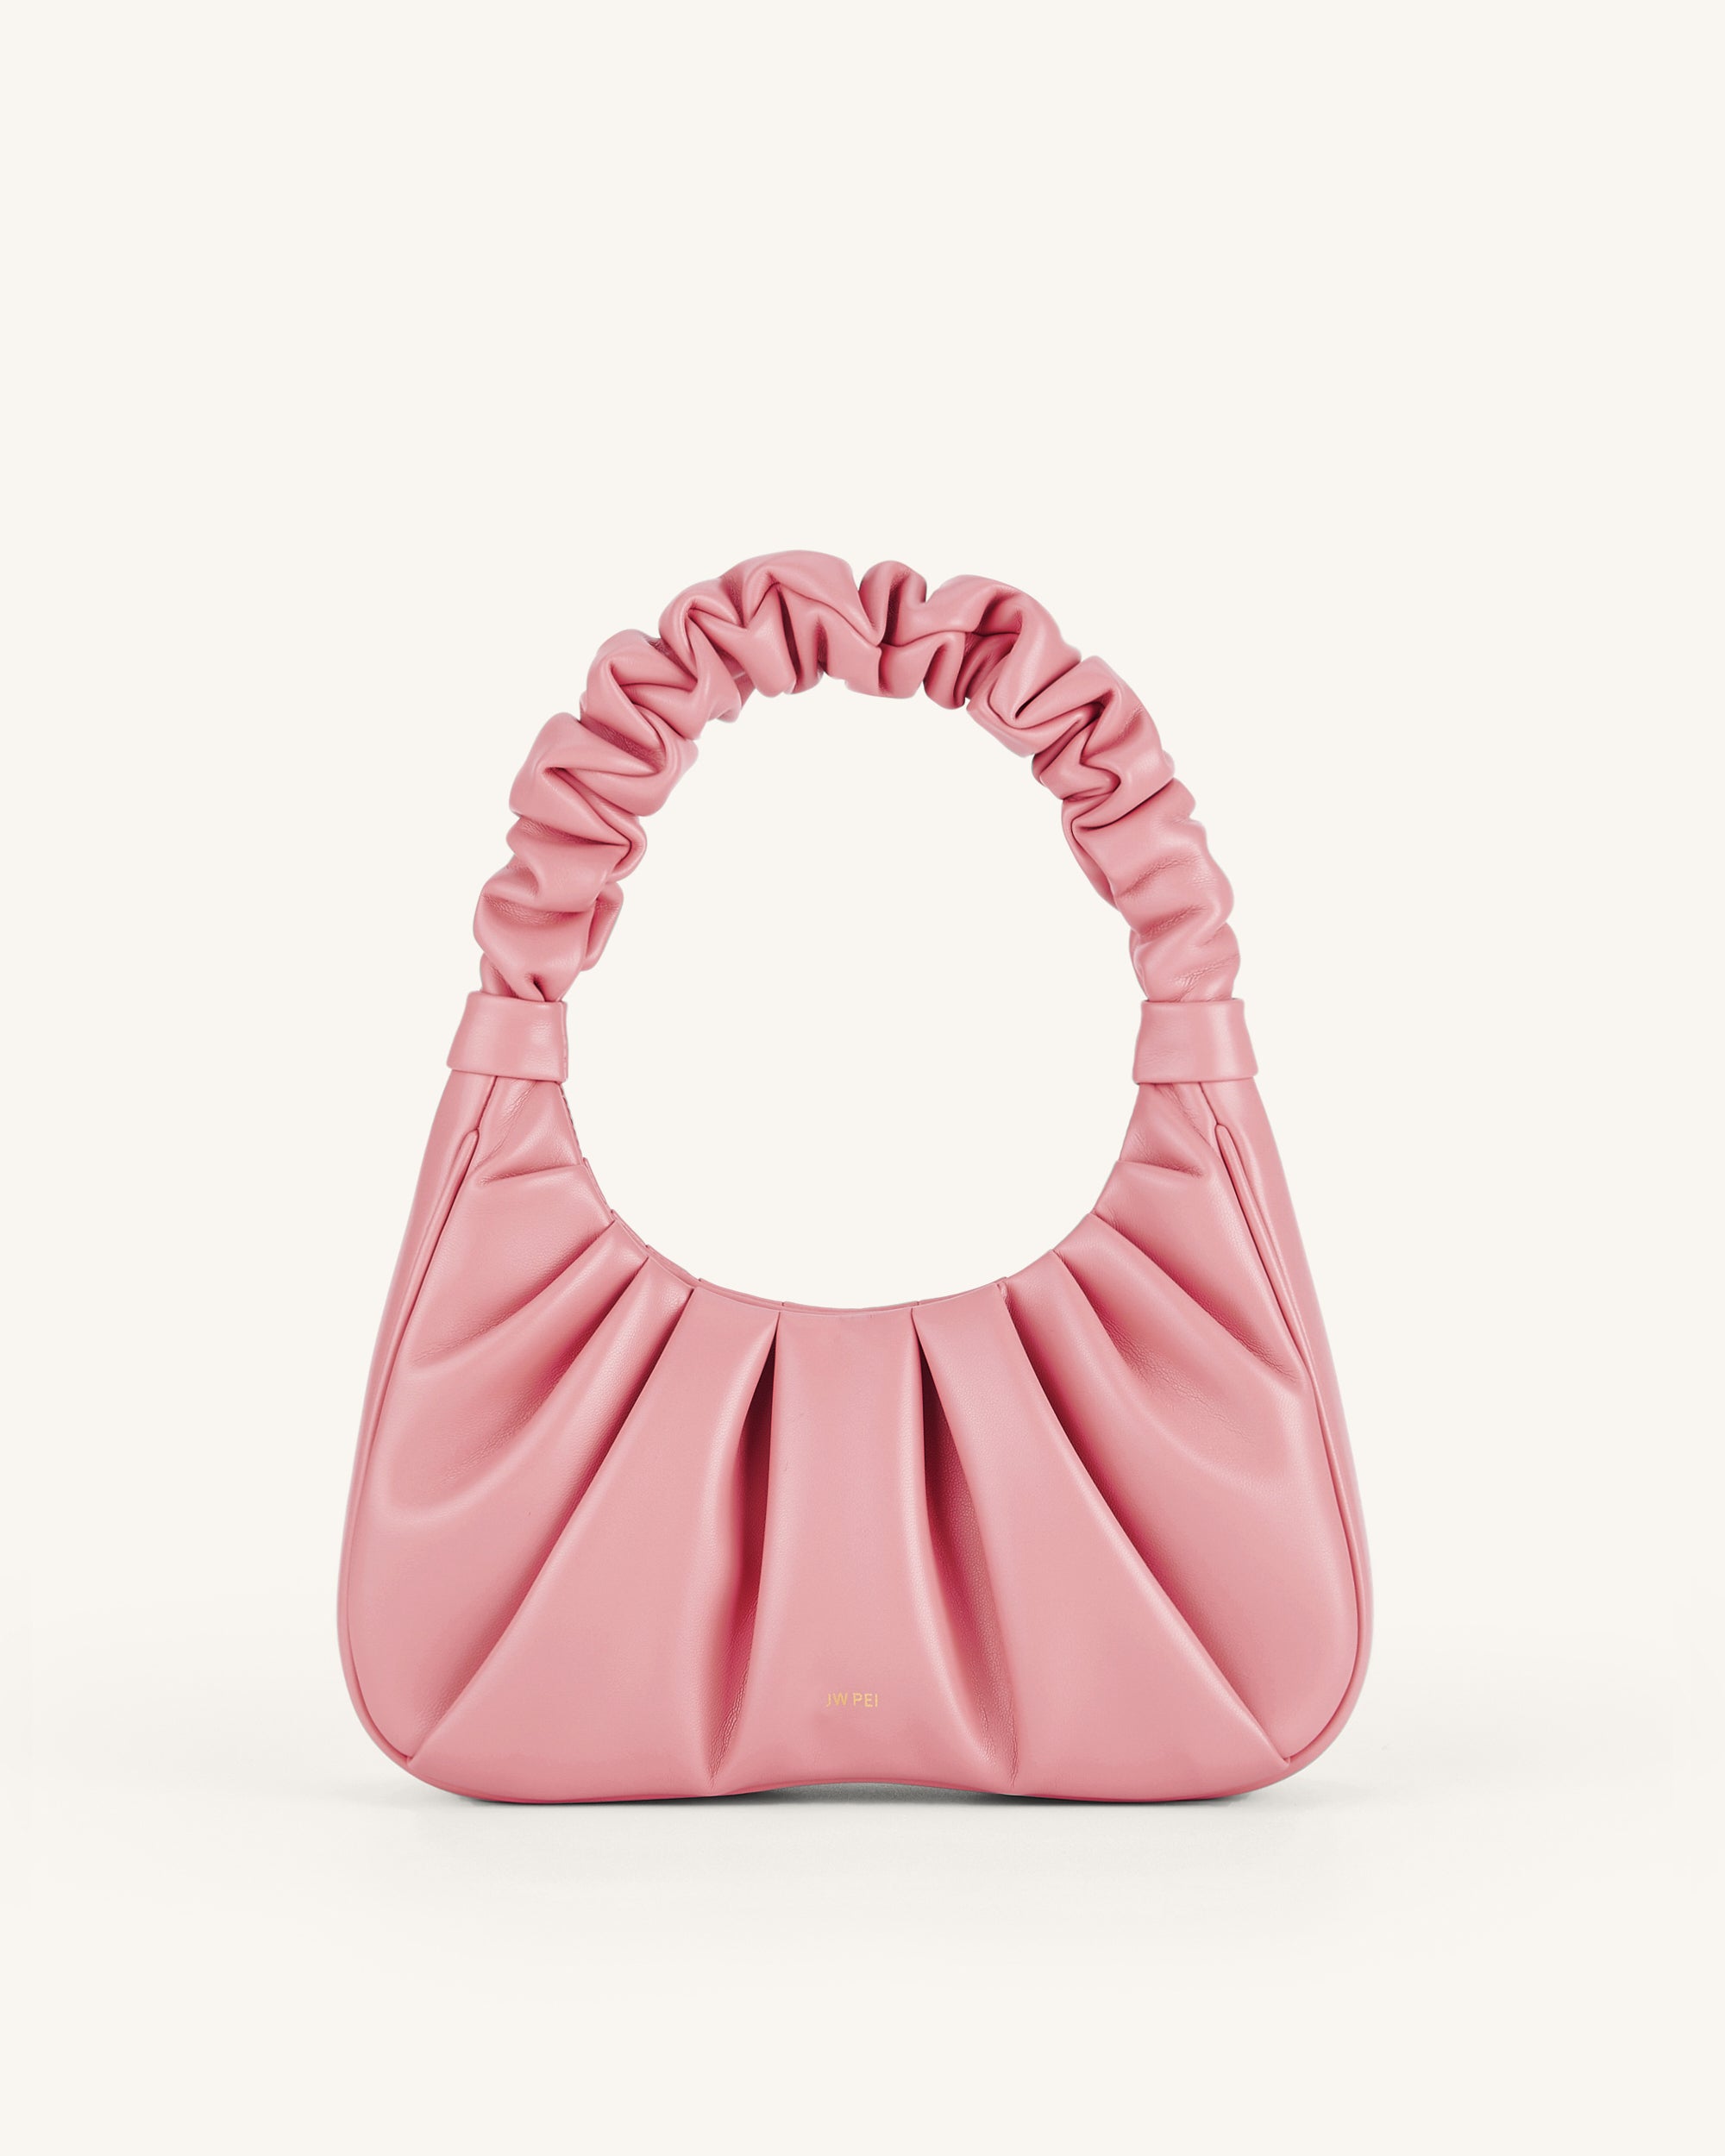 Gabbi Crushed Ruched Hobo Handbag - Bright Pink Online Shopping - JW Pei